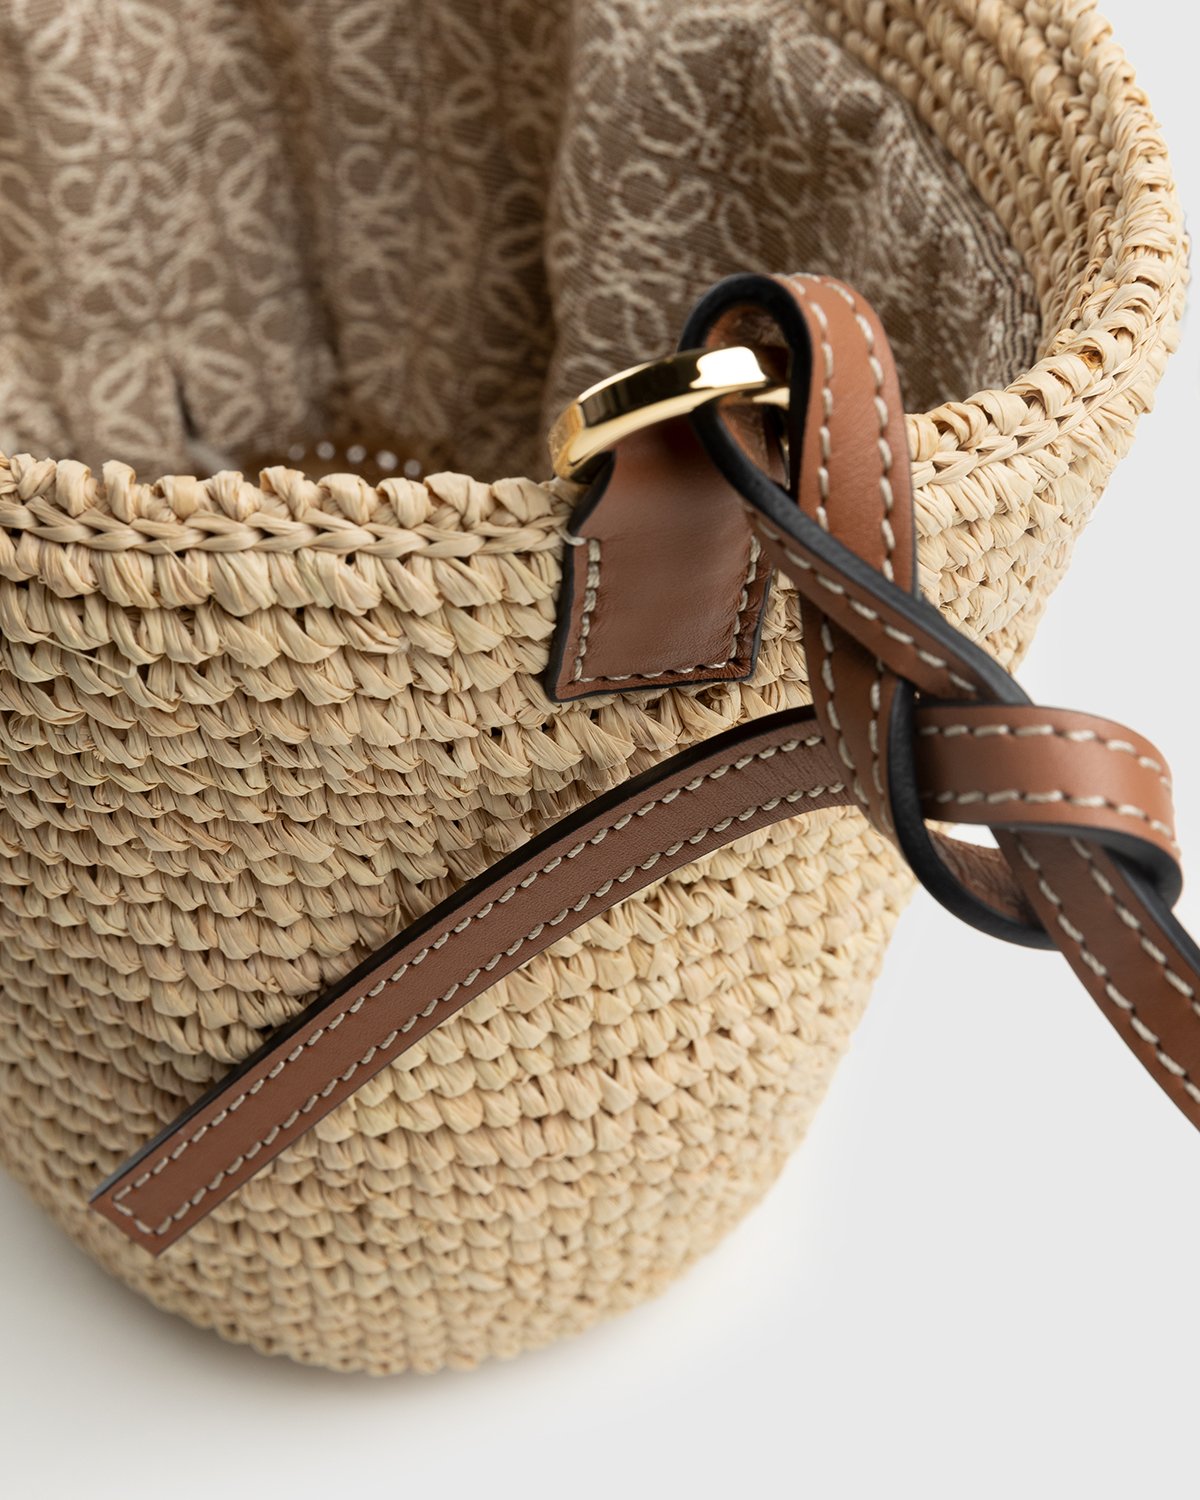 Loewe - Paula's Ibiza Pochette Anagram Basket Bag Natural/Tan - Accessories - Beige - Image 7